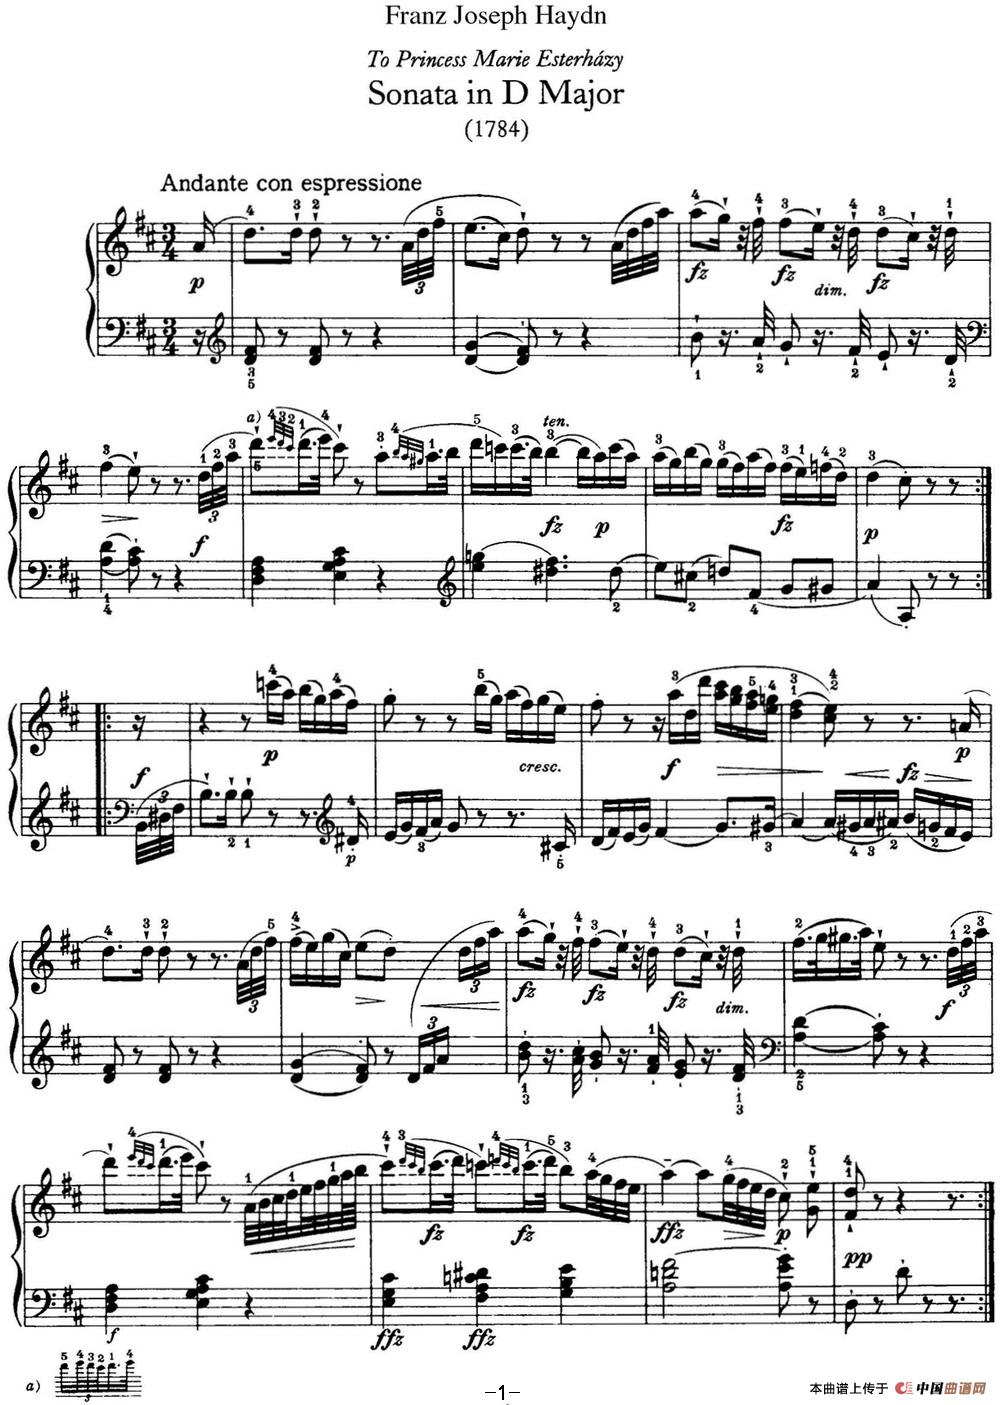 海顿 钢琴奏鸣曲 Hob XVI 42 in D major